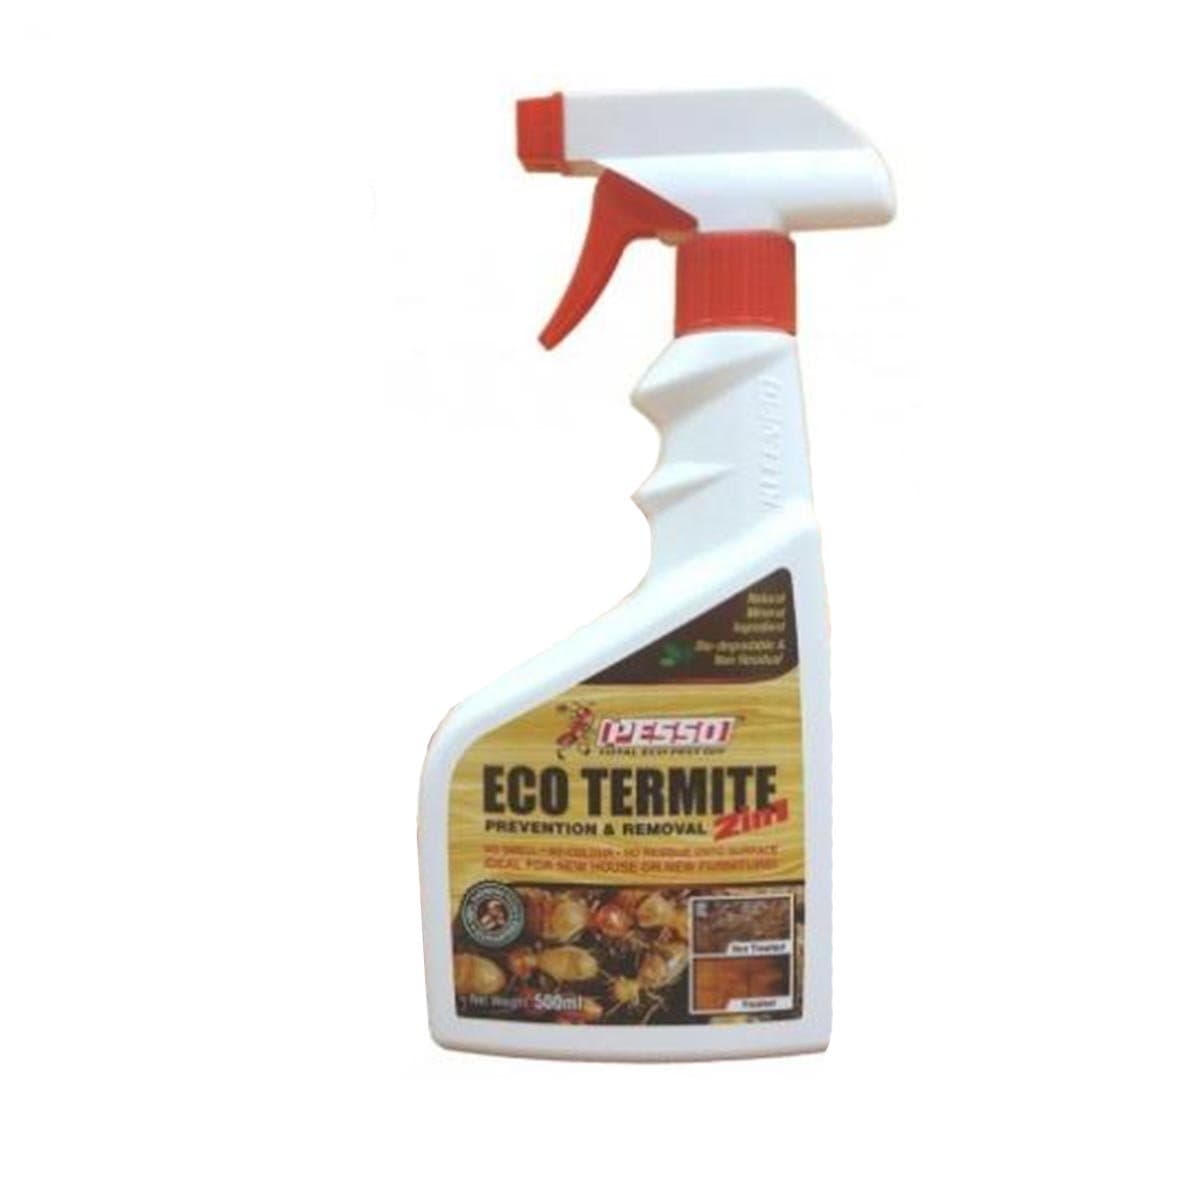 KHC879 Eco Termite Removal 500ml